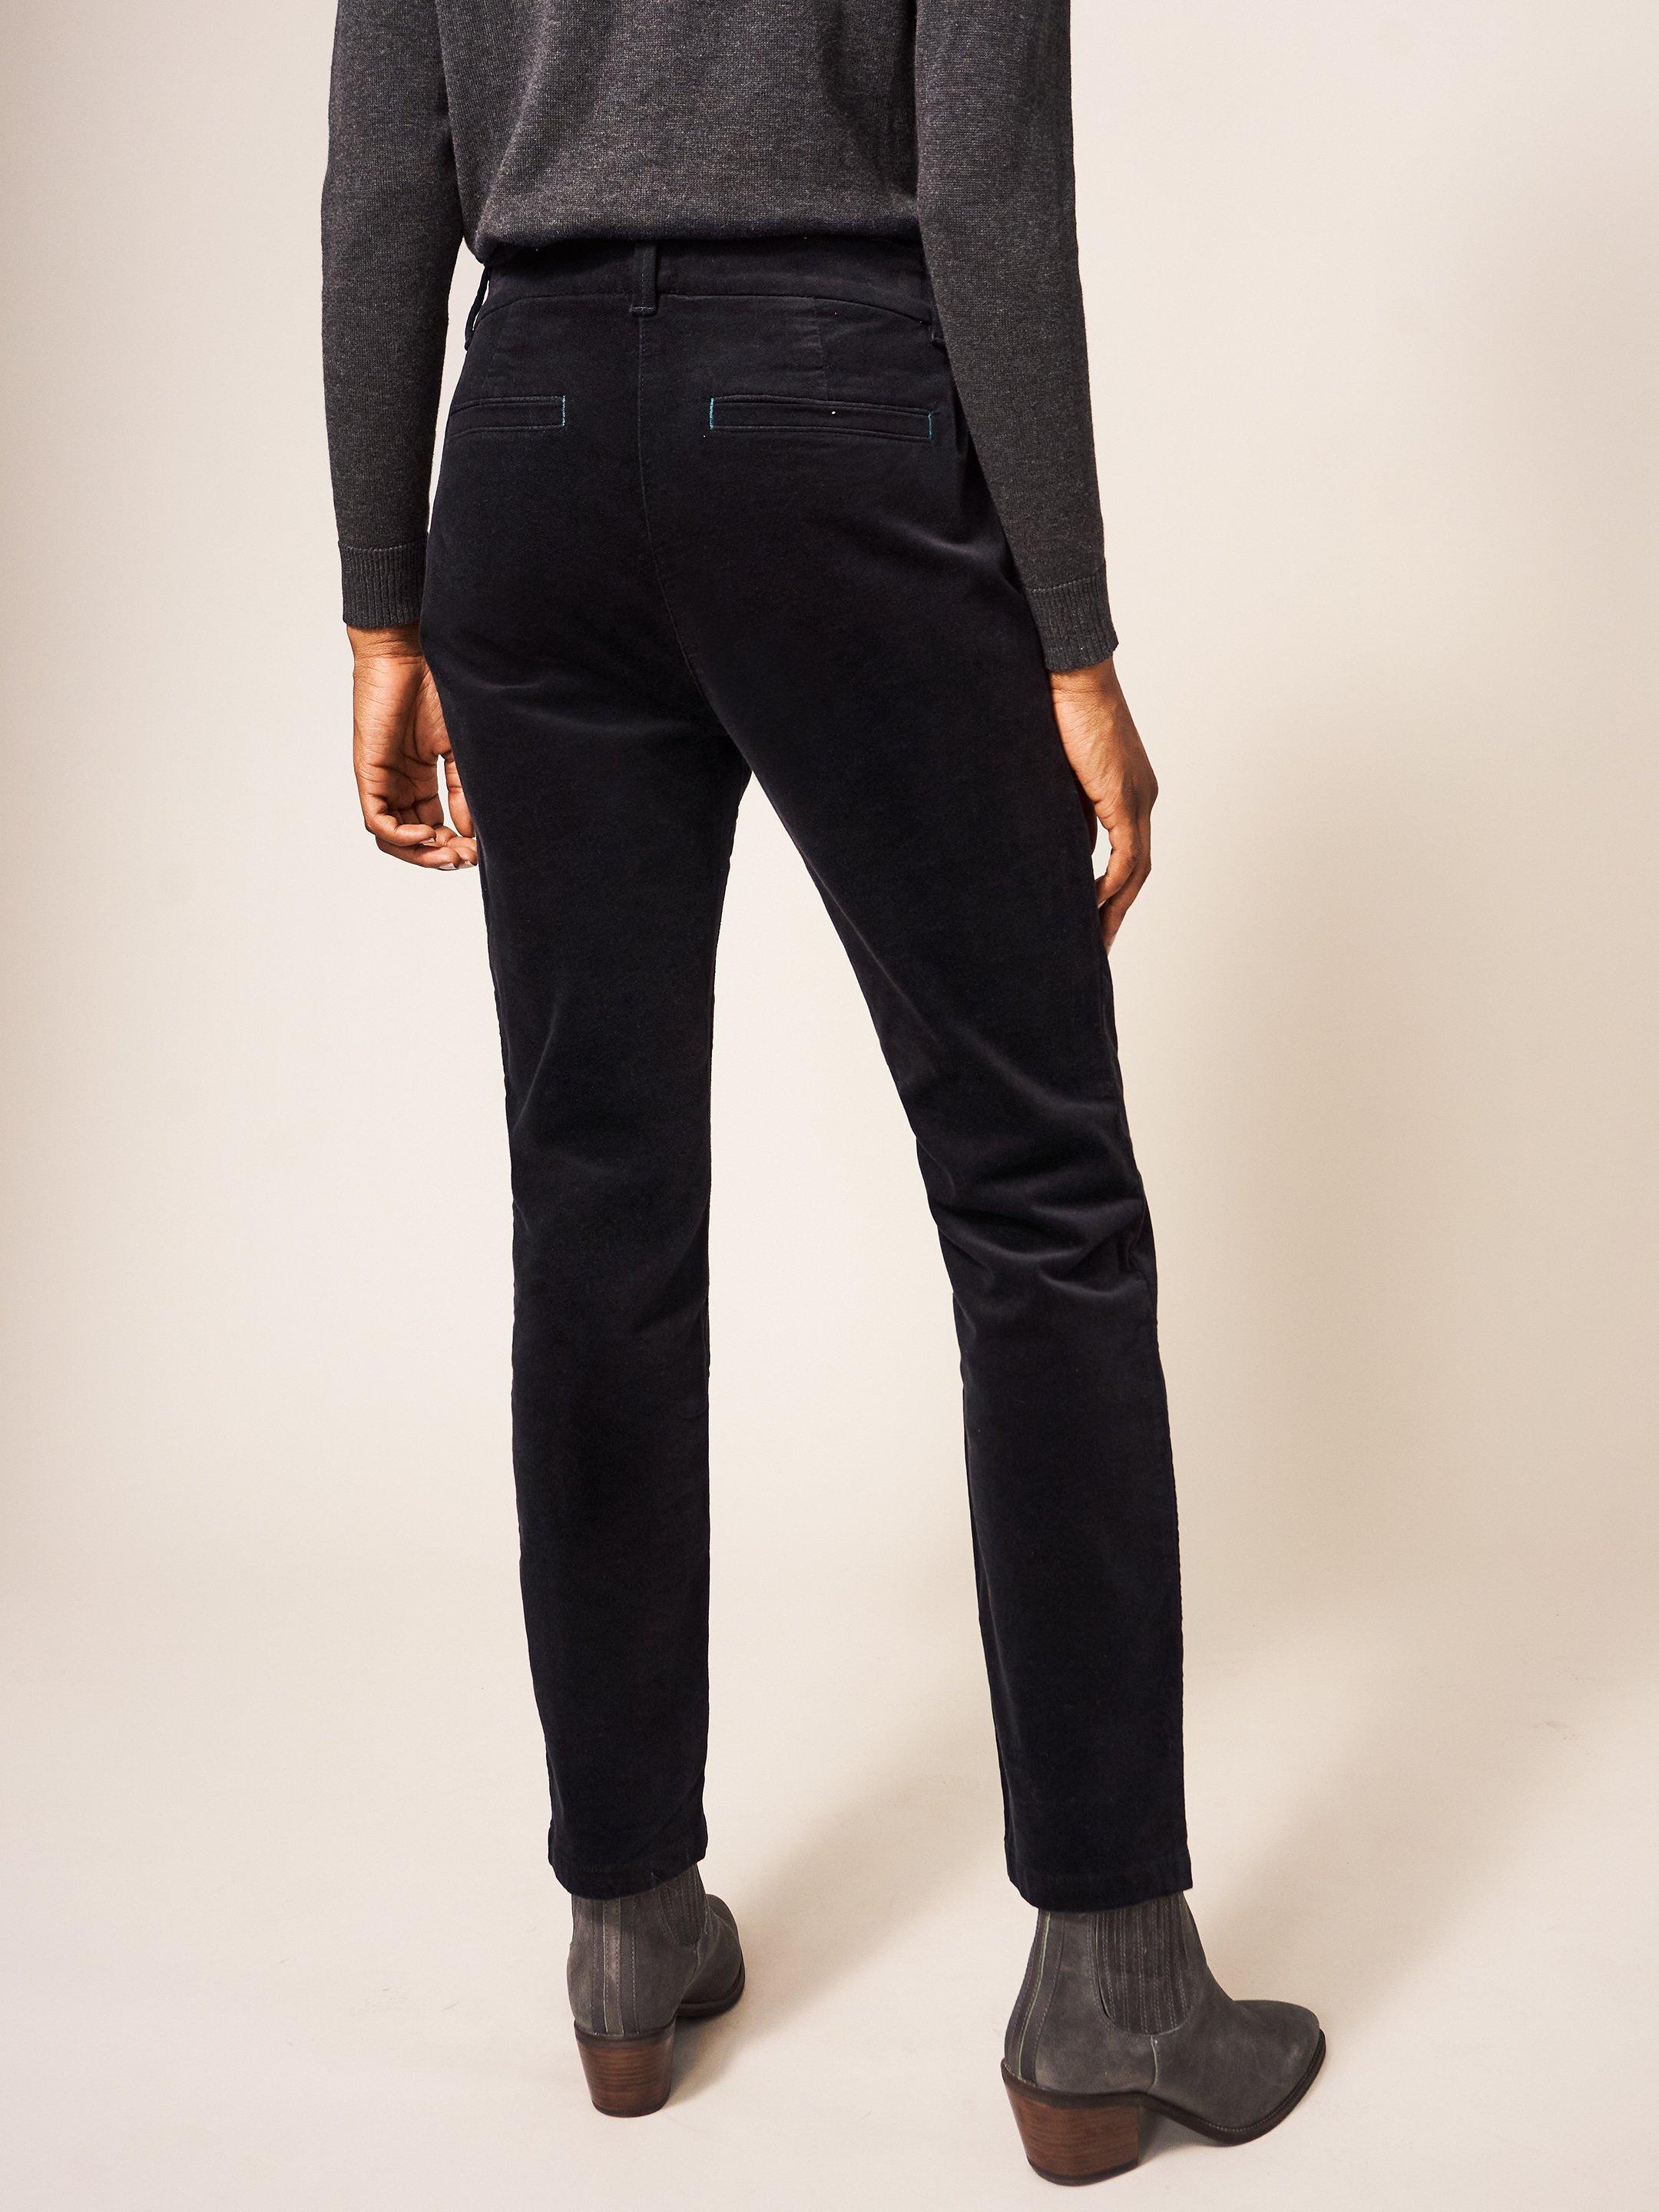 Sienna Stretch Velvet Trousers in DK GREY - MODEL FRONT